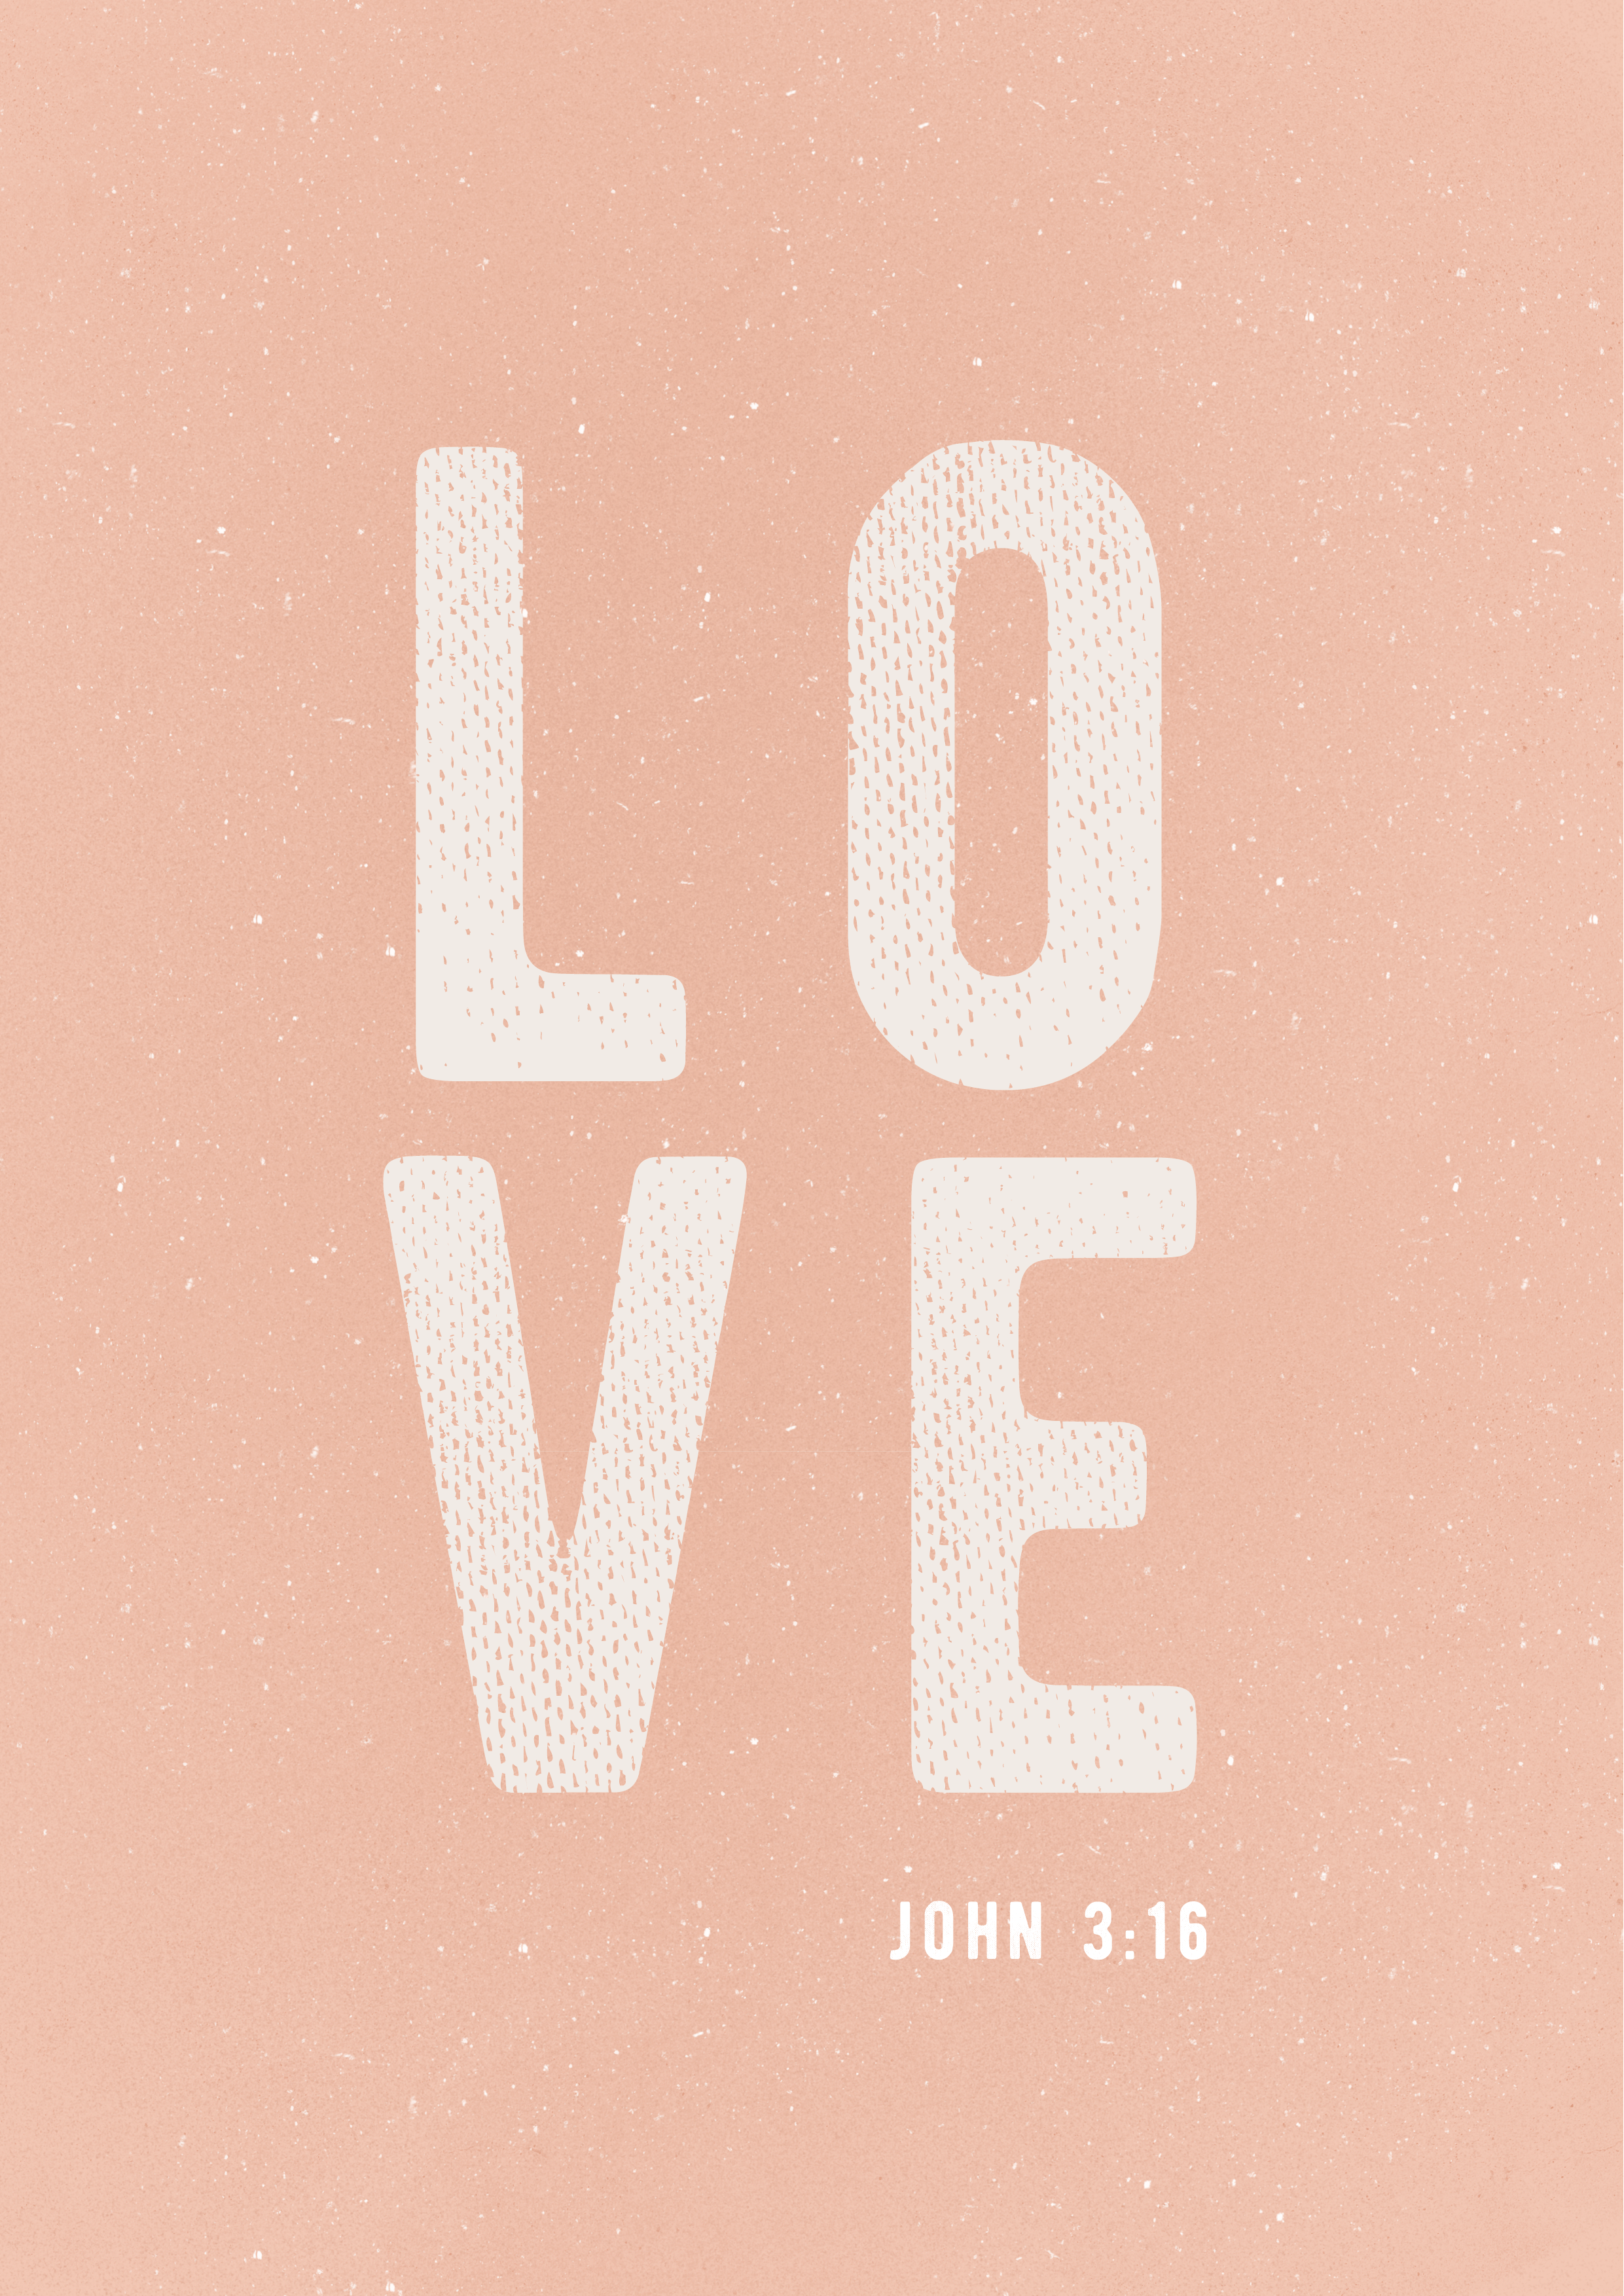 JOHN 3:16  CHRISTIAN ART PRINT